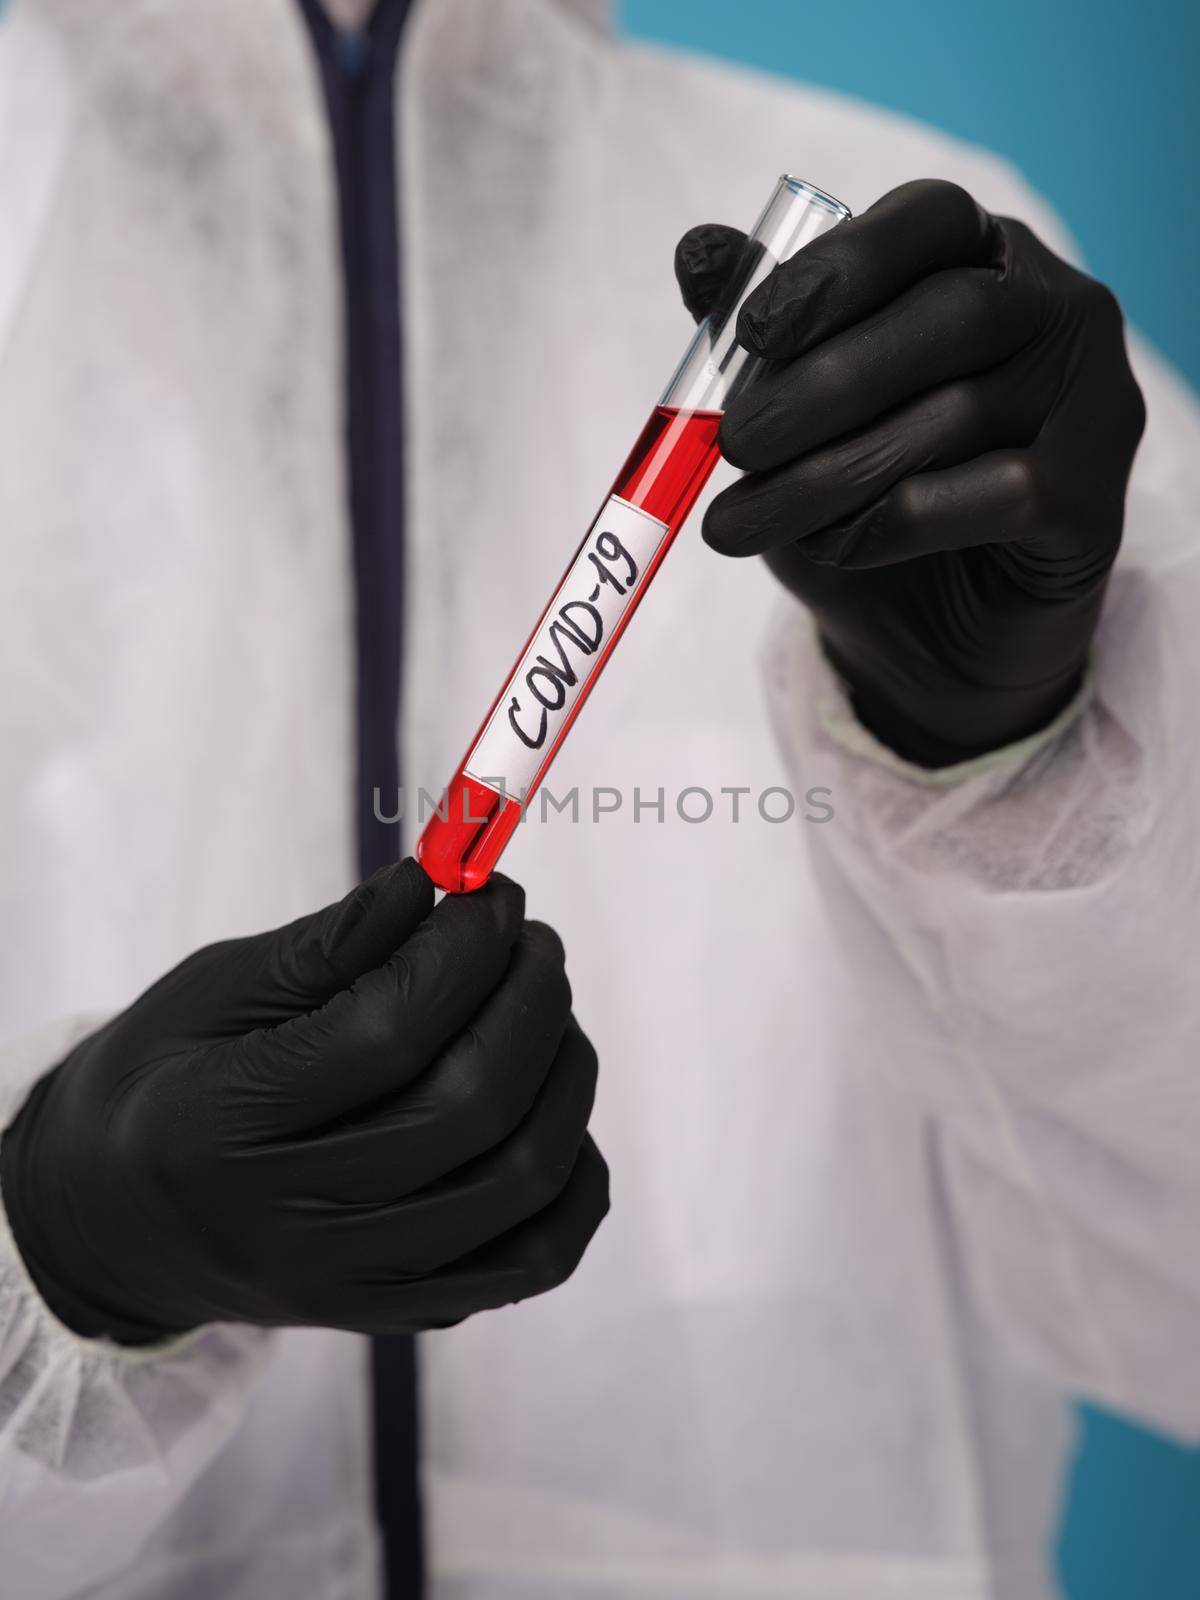 Laboratory blood test black gloves research diagnostics . High quality photo